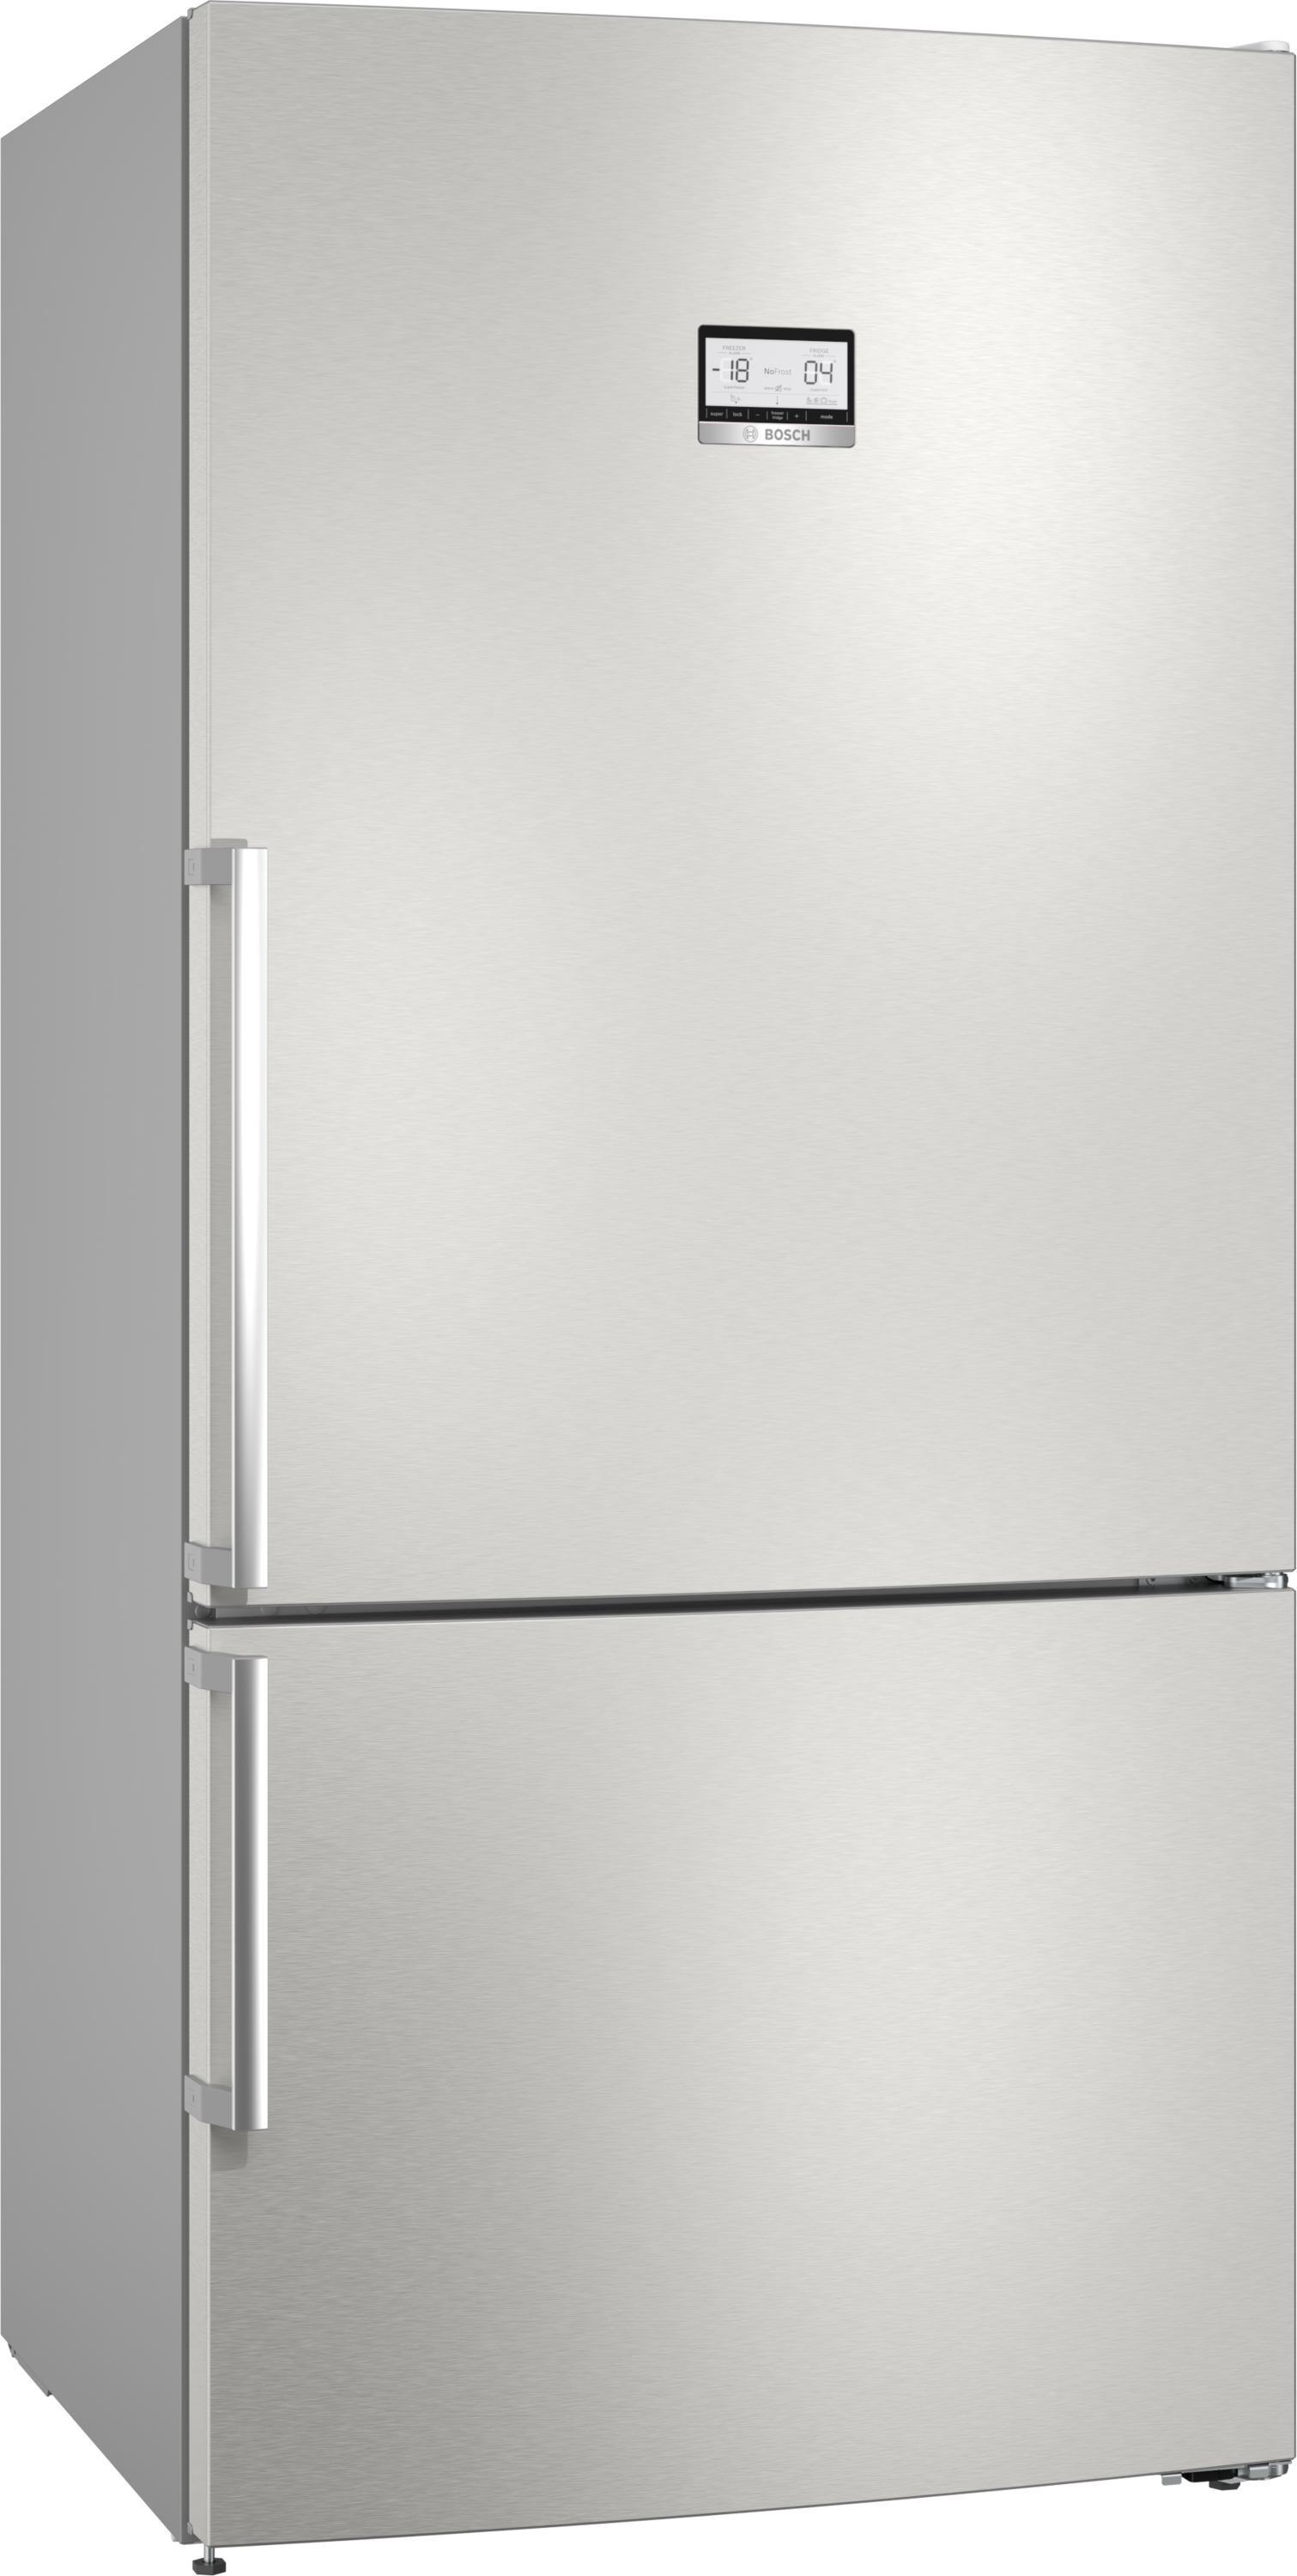 KGN86AIDR Combina frigorifica independenta, 186 x 86 cm, Inox- easyclean,serie 6 